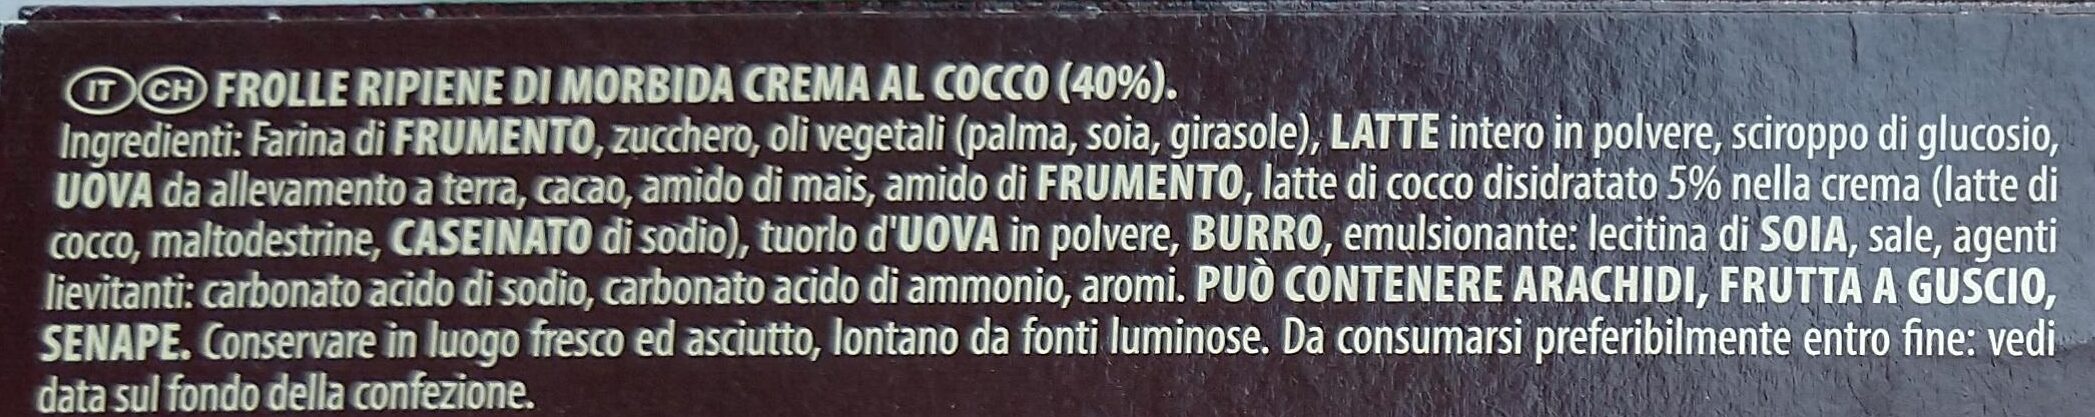 Grisbì cocco - المكونات - it